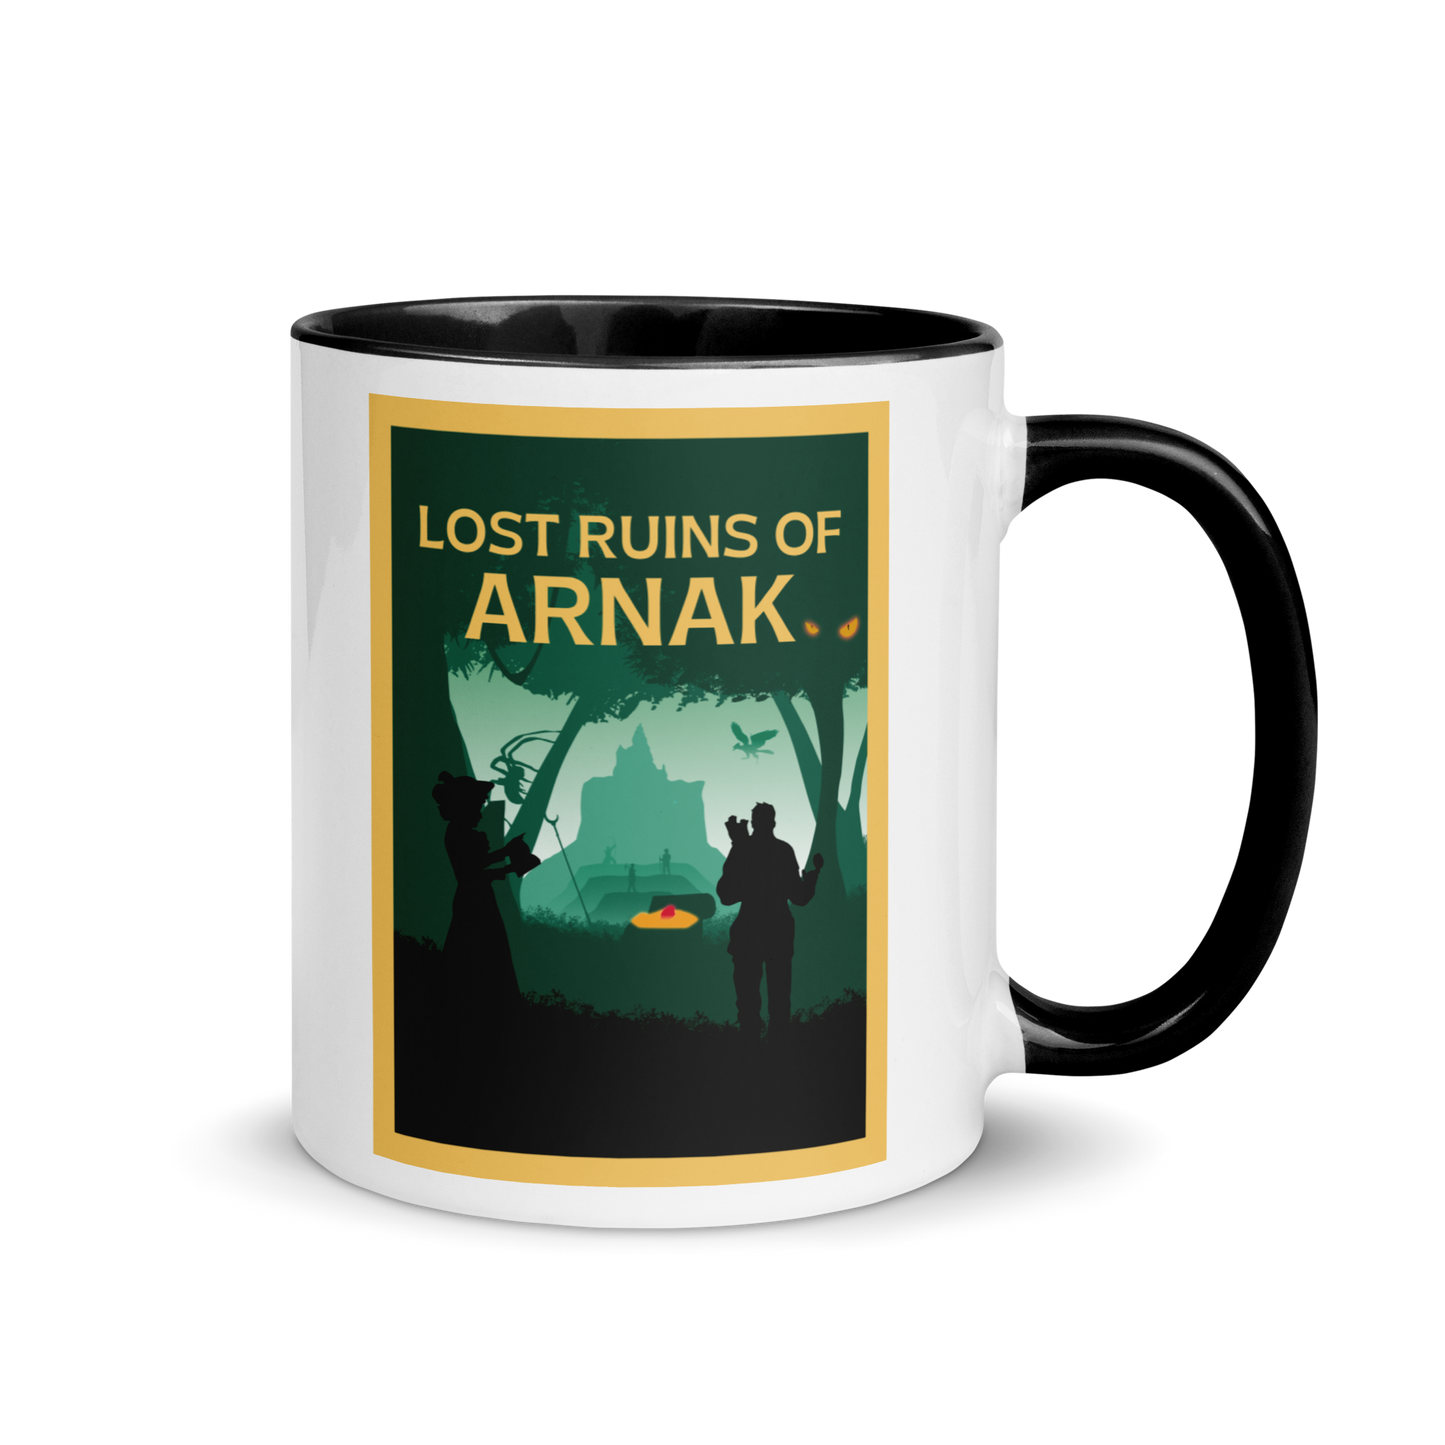 Lost Ruins of Arnak (Temple) Minimalist Board Game Mug